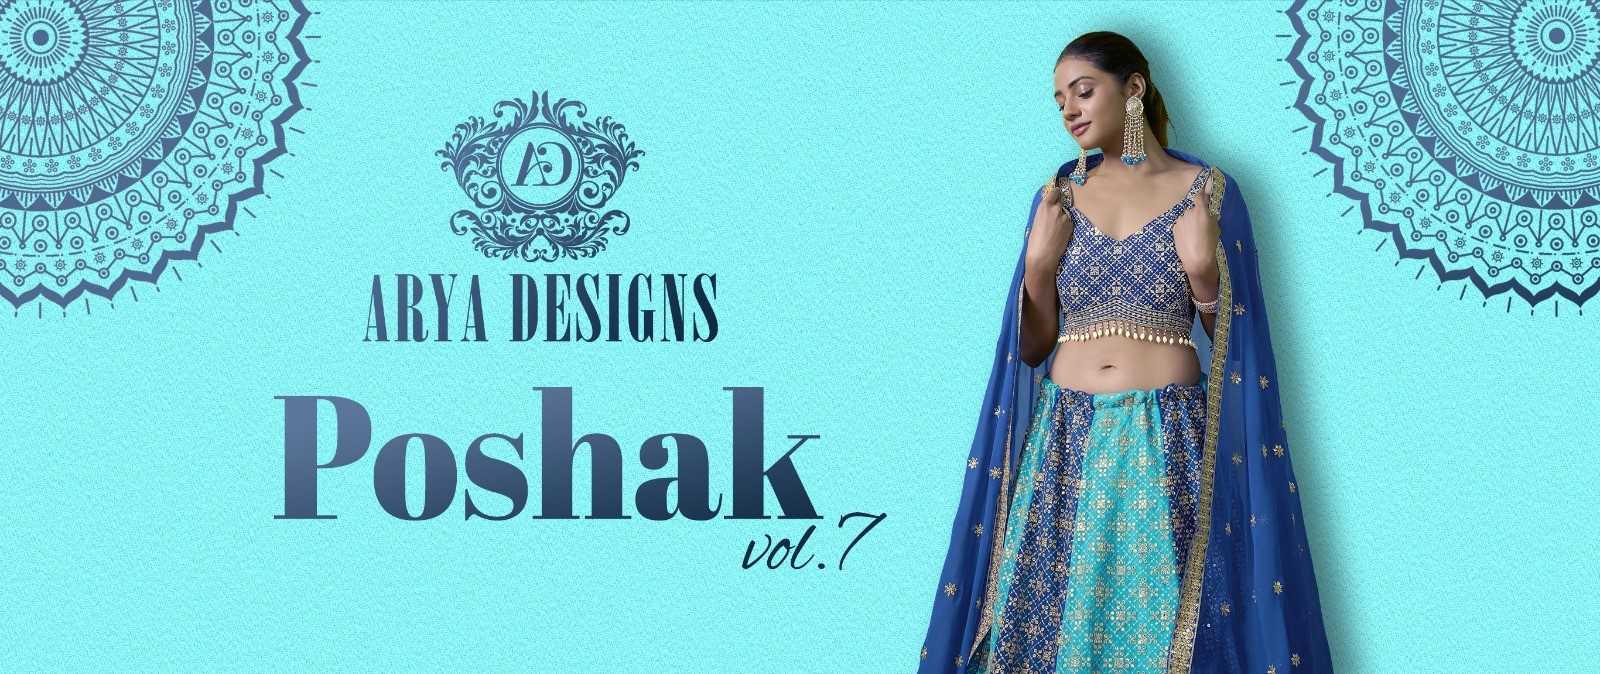 arya designs present poshak vol 7 exclusive fashionable semi stitch bridal lehenga